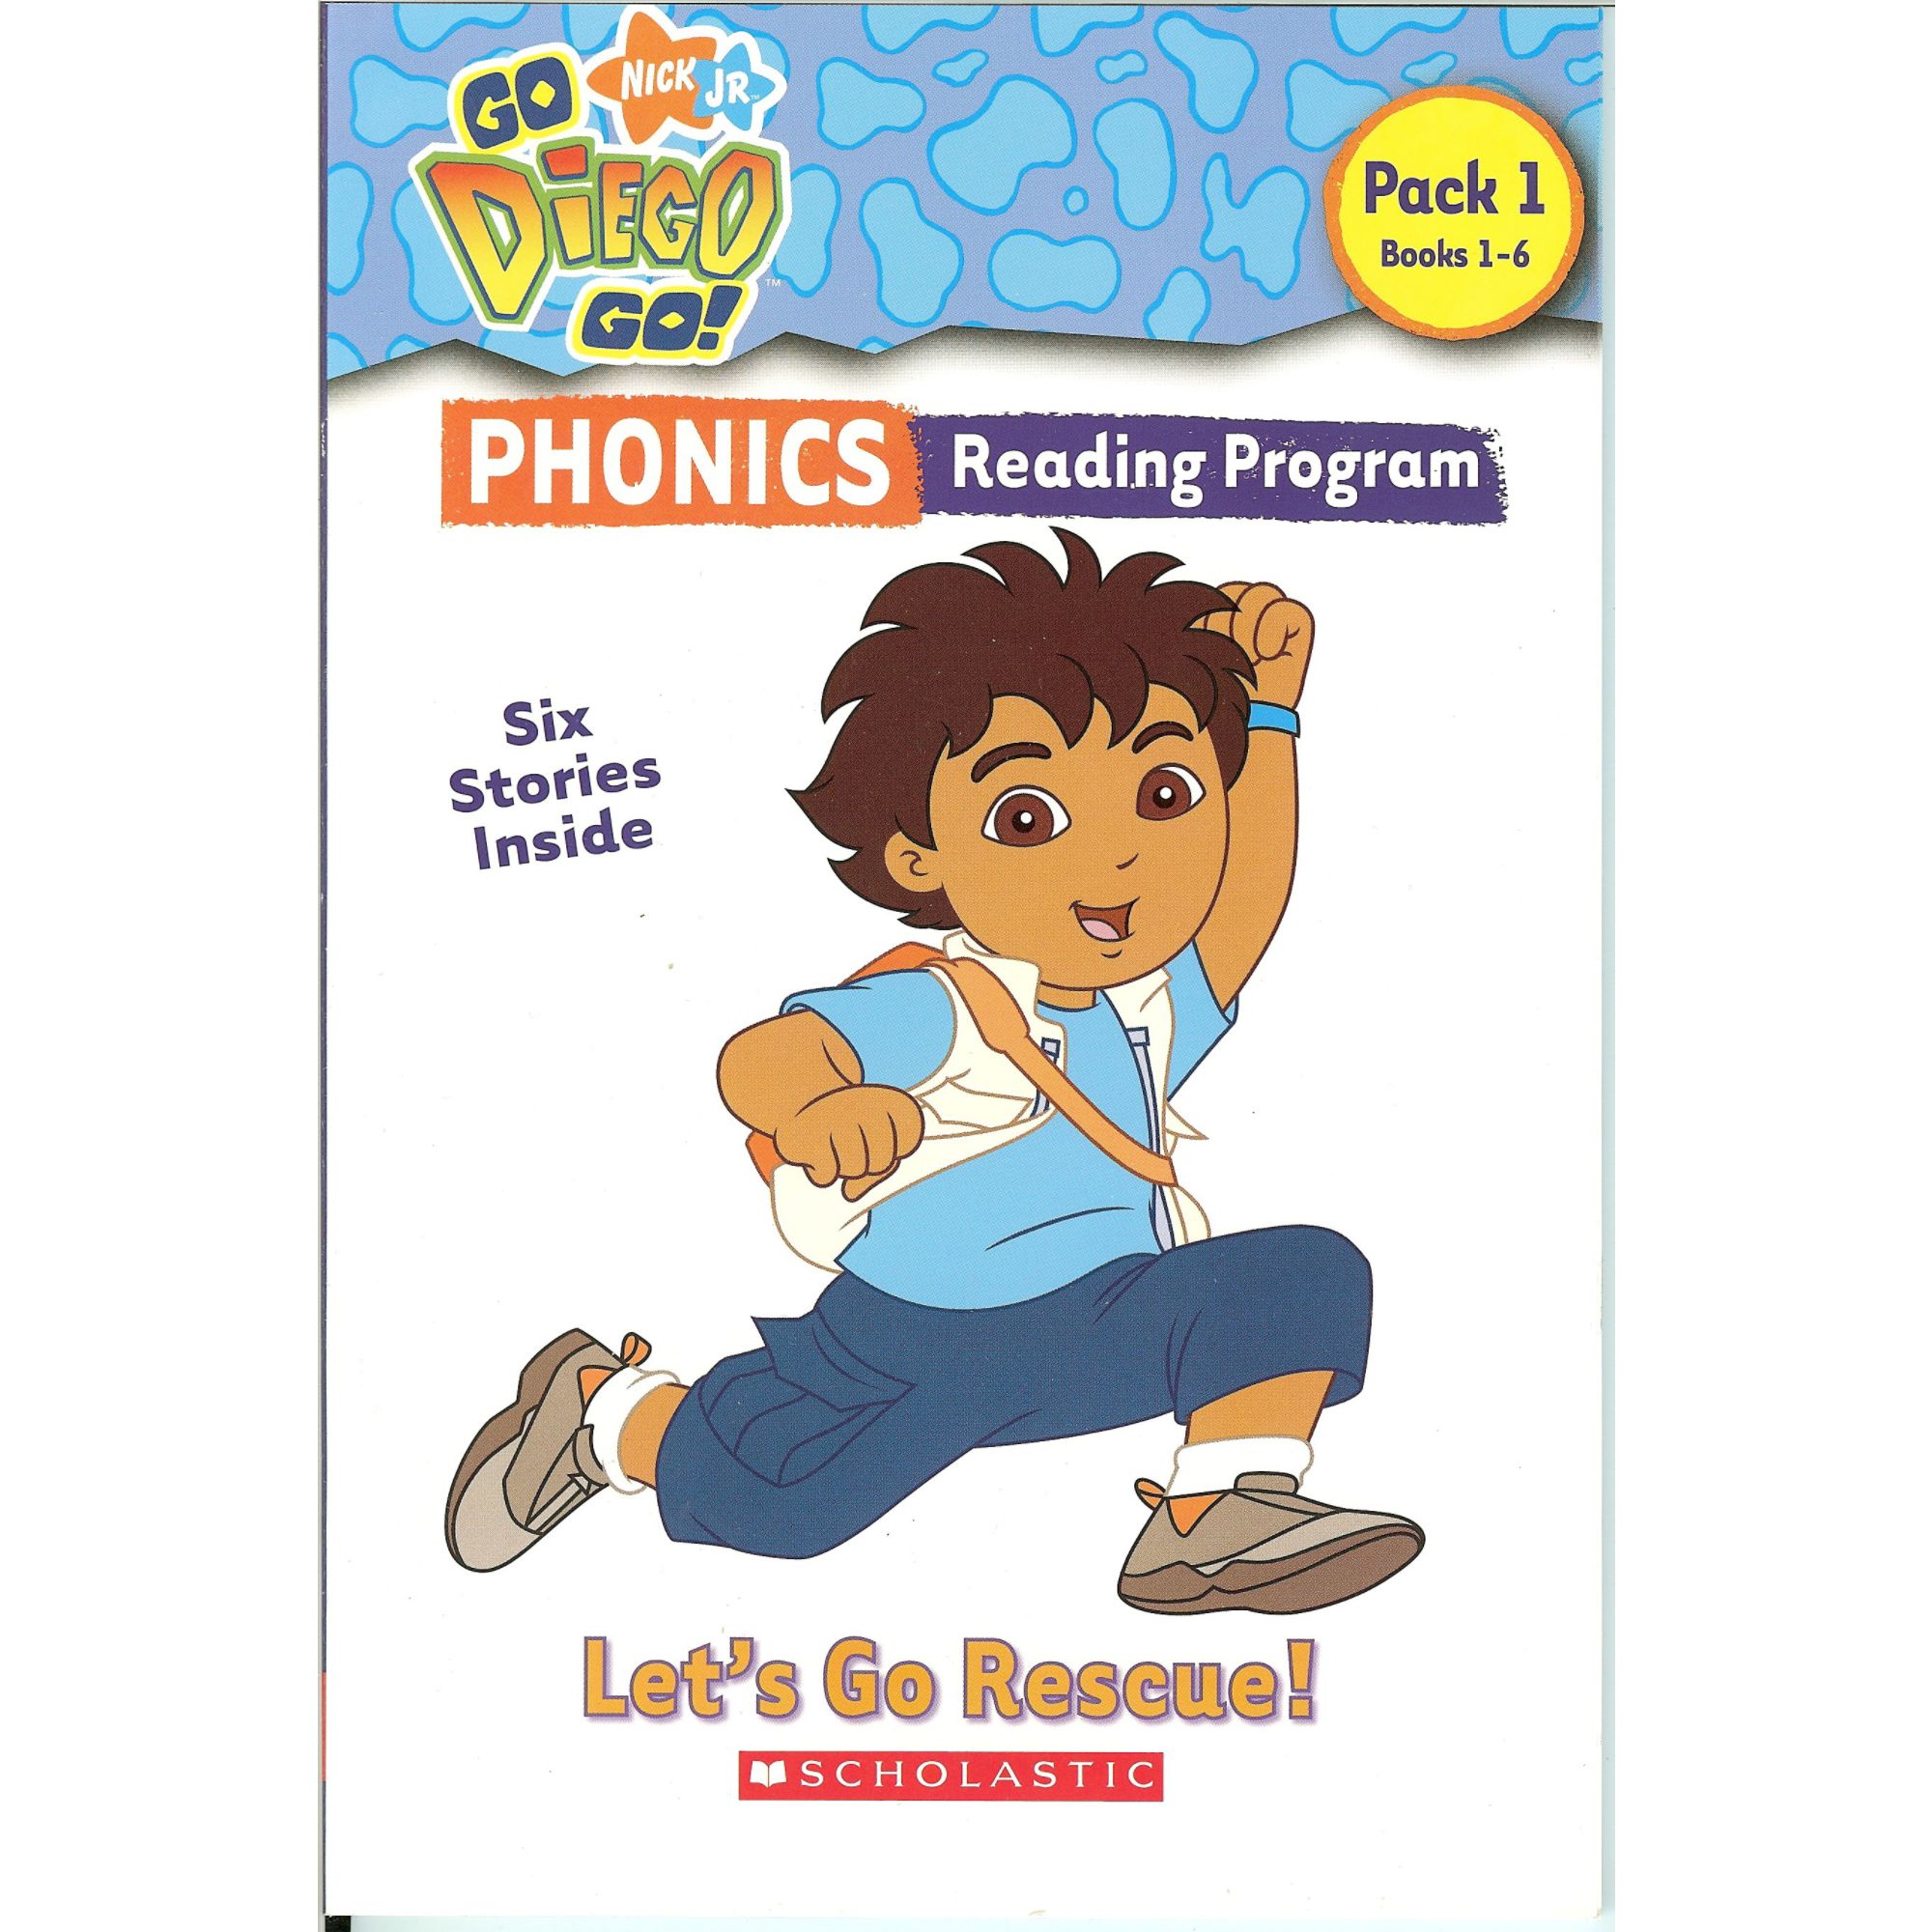 Nick Jr. Go Diego Go Phonics Reading Program Lets Go Rescue